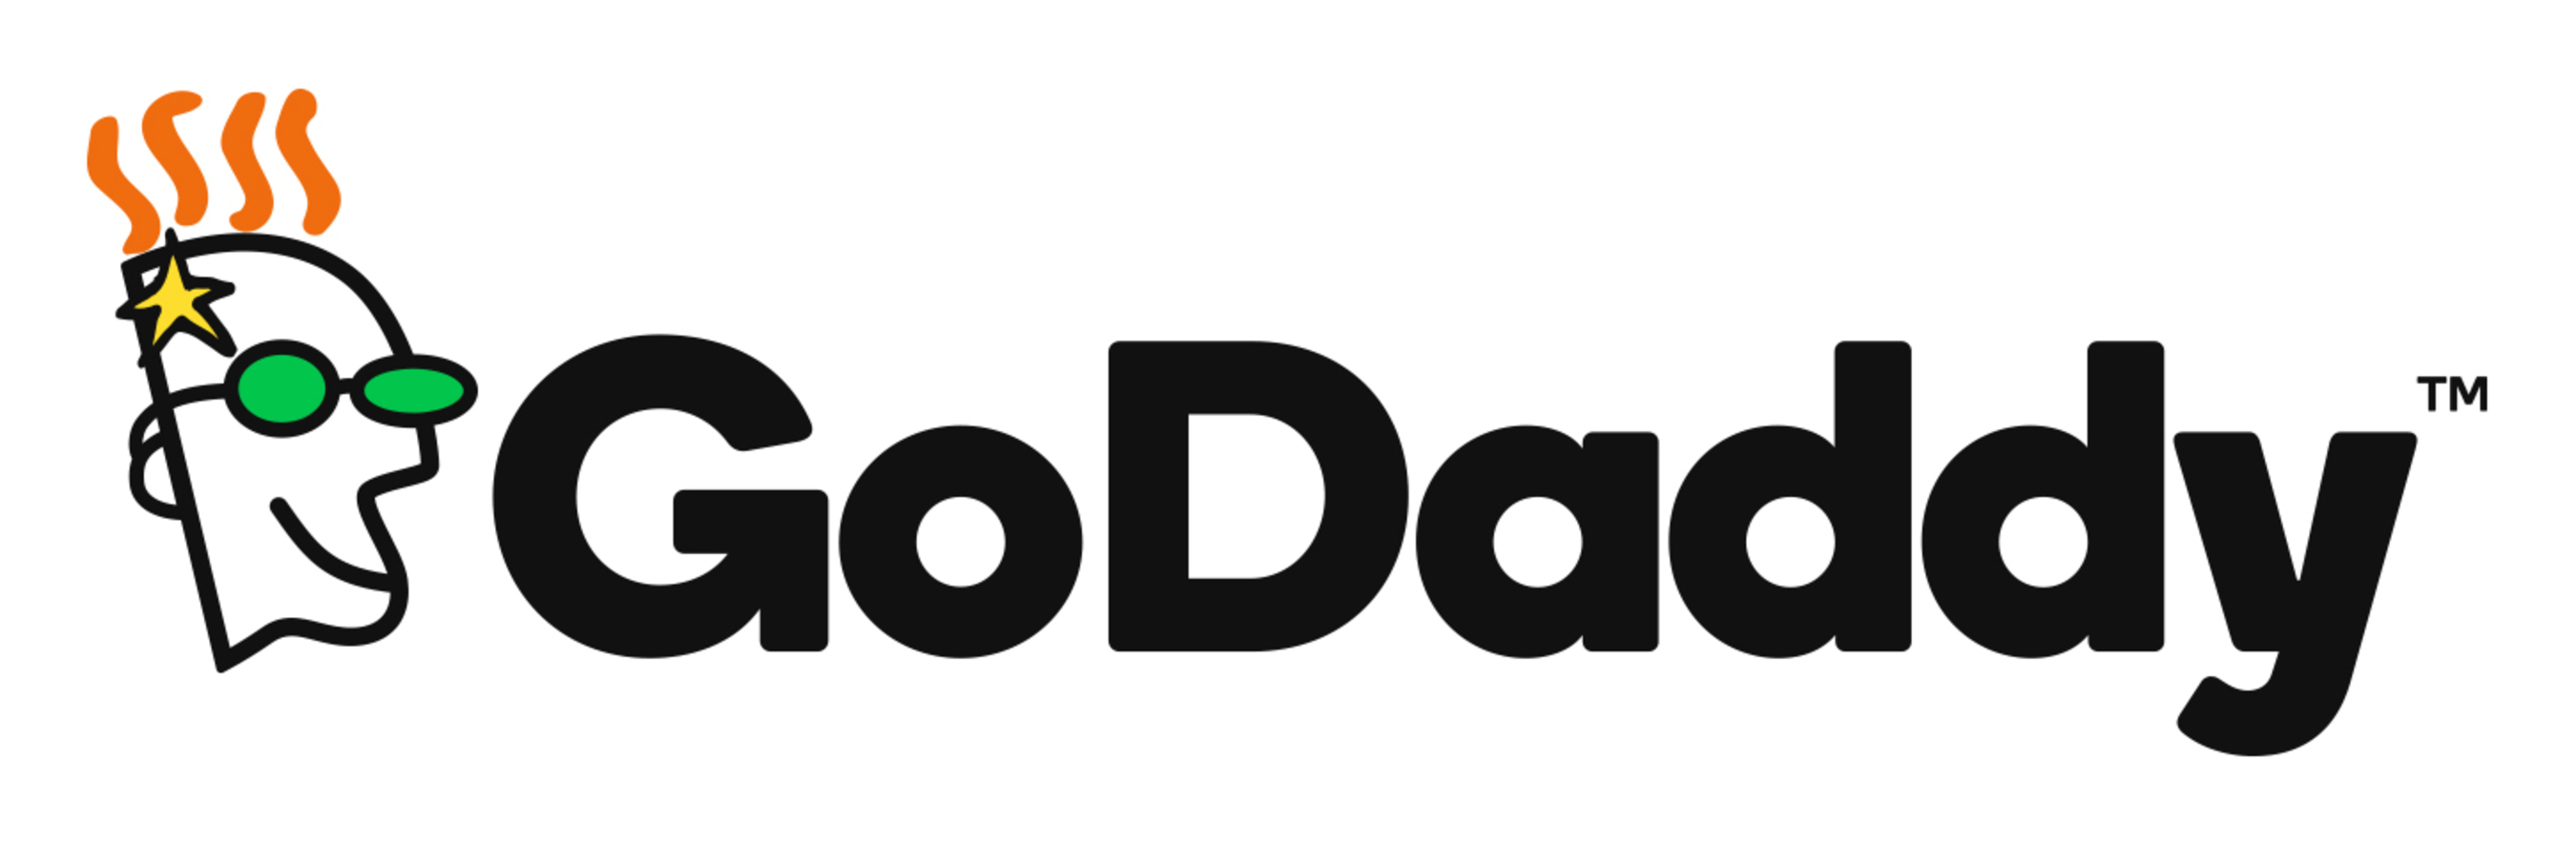 GoDaddy Announces Worldwide Launch of Cloud Servers & Cloud Applications